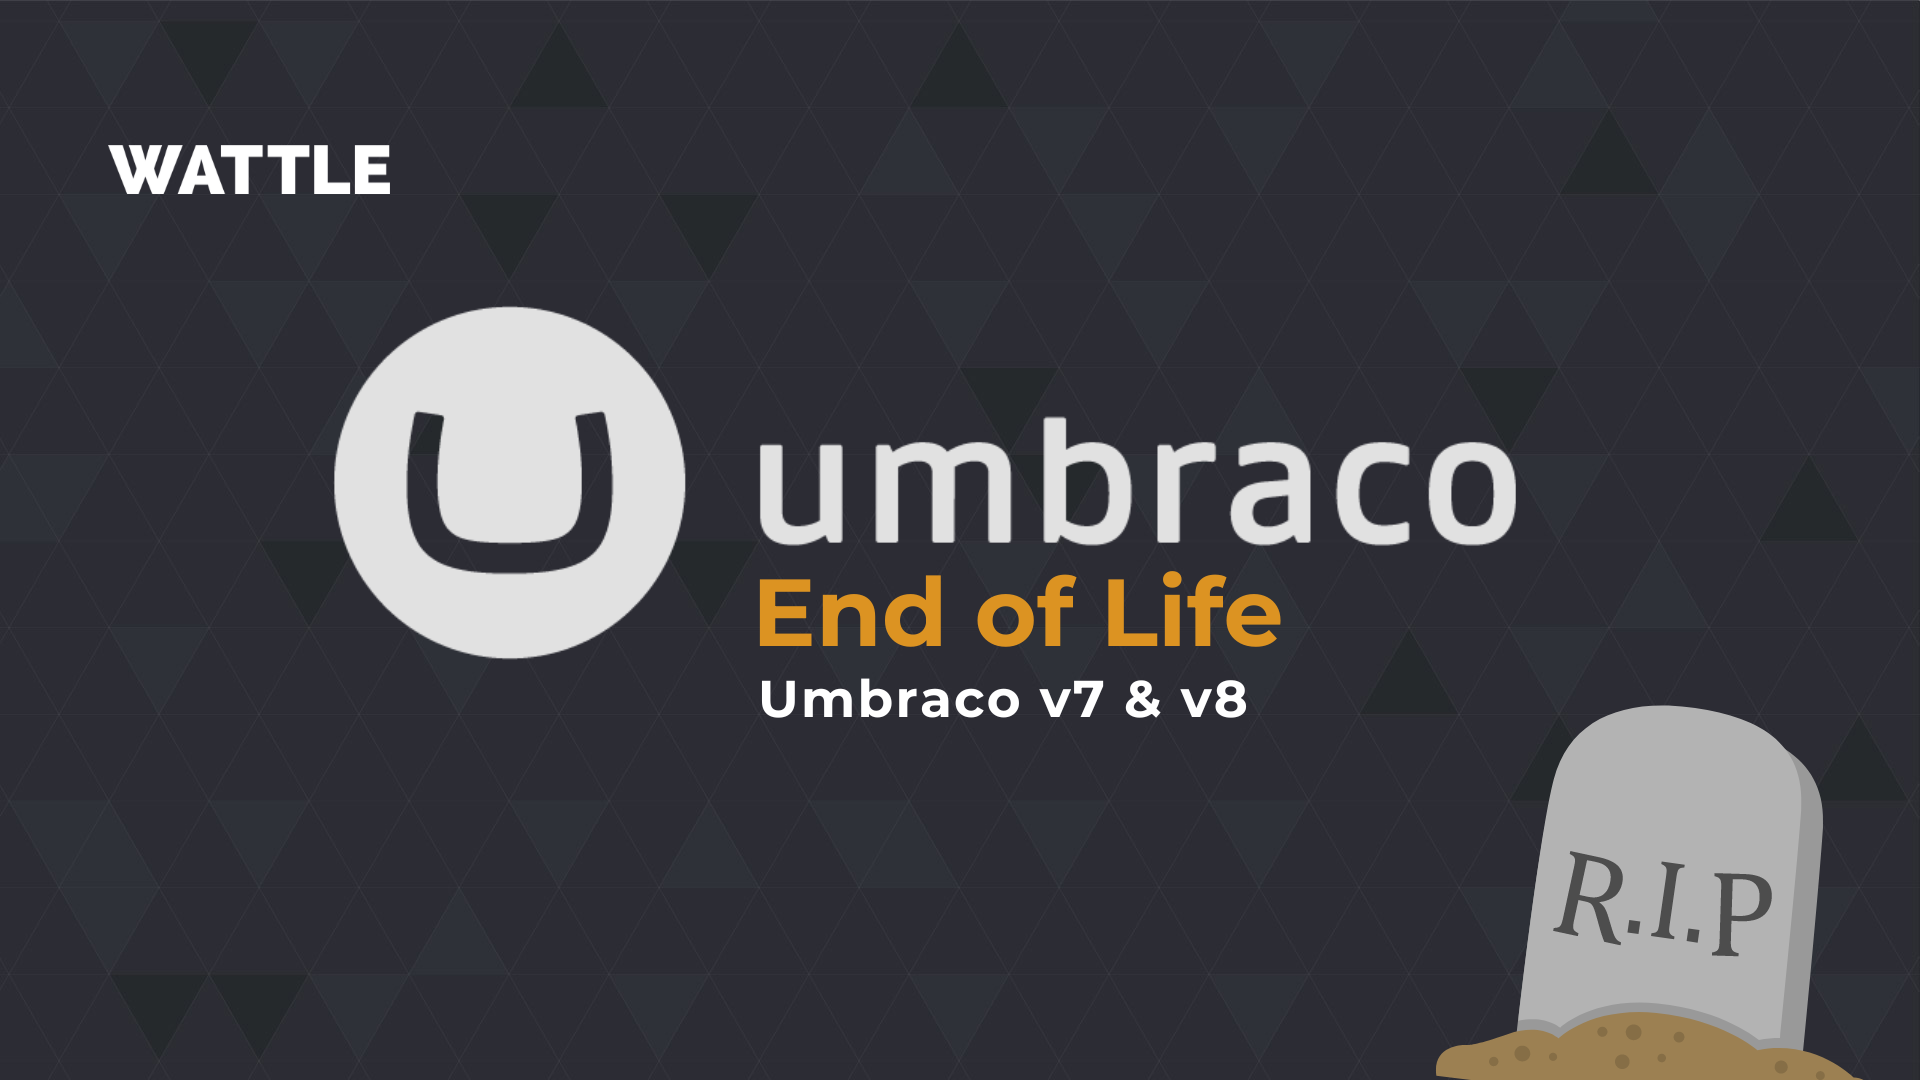 Img: Wattle logo, Umbraco Logo, Text saying End of Life for V7 & V8